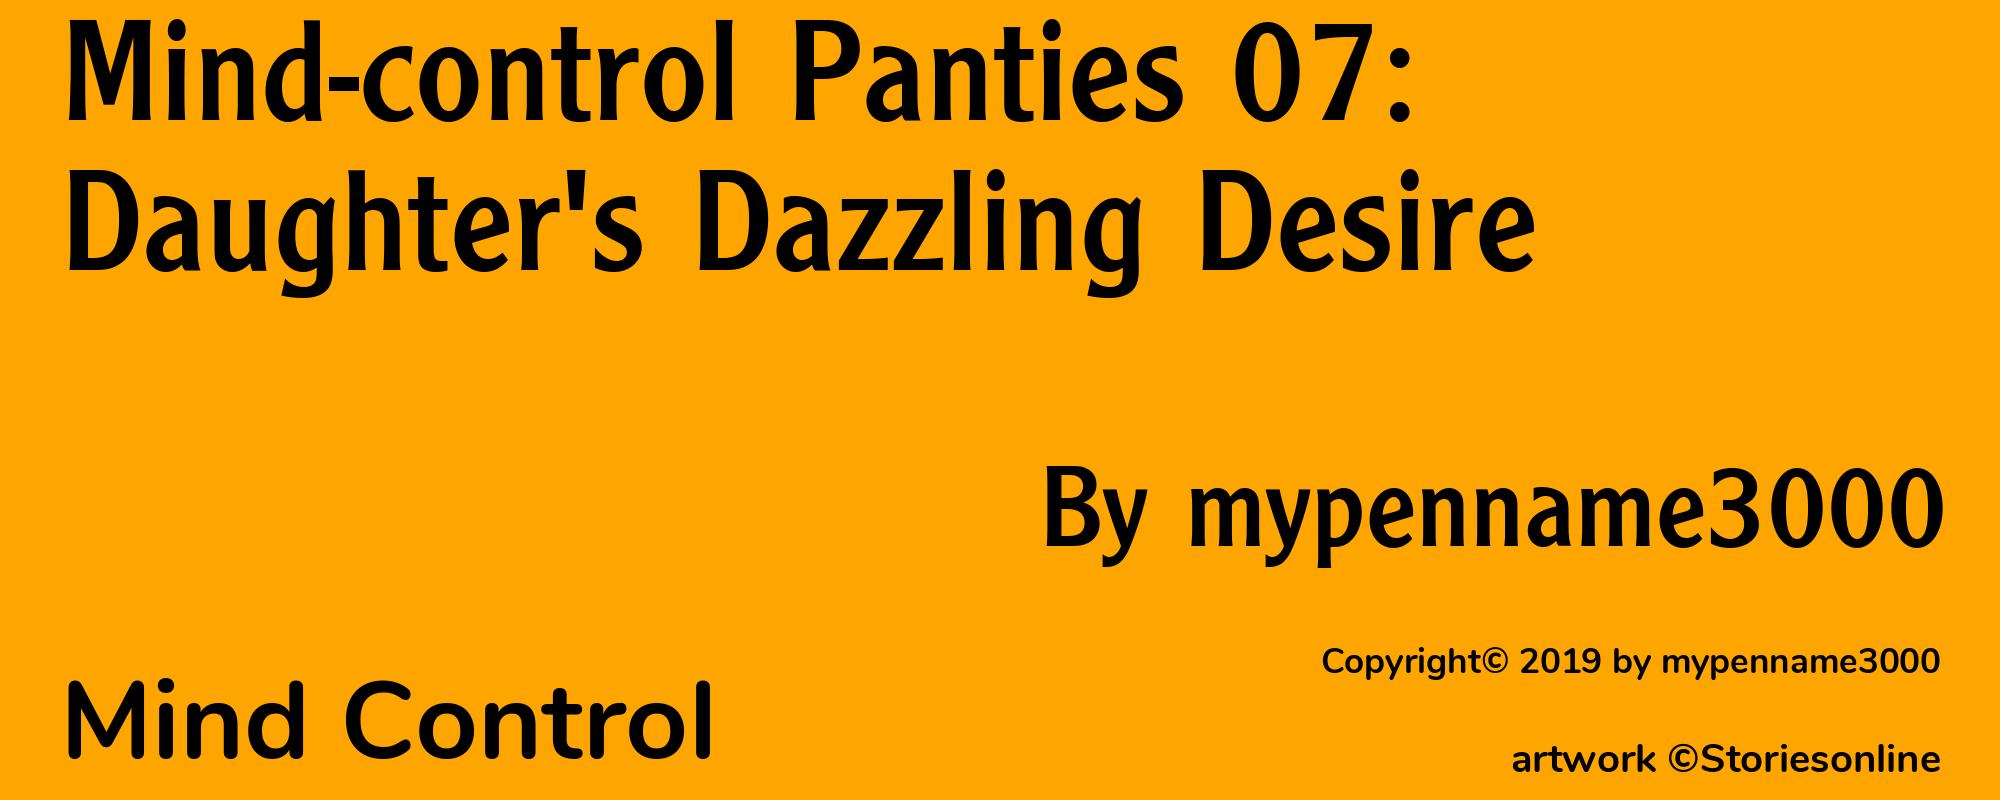 Mind-control Panties 07: Daughter's Dazzling Desire - Cover